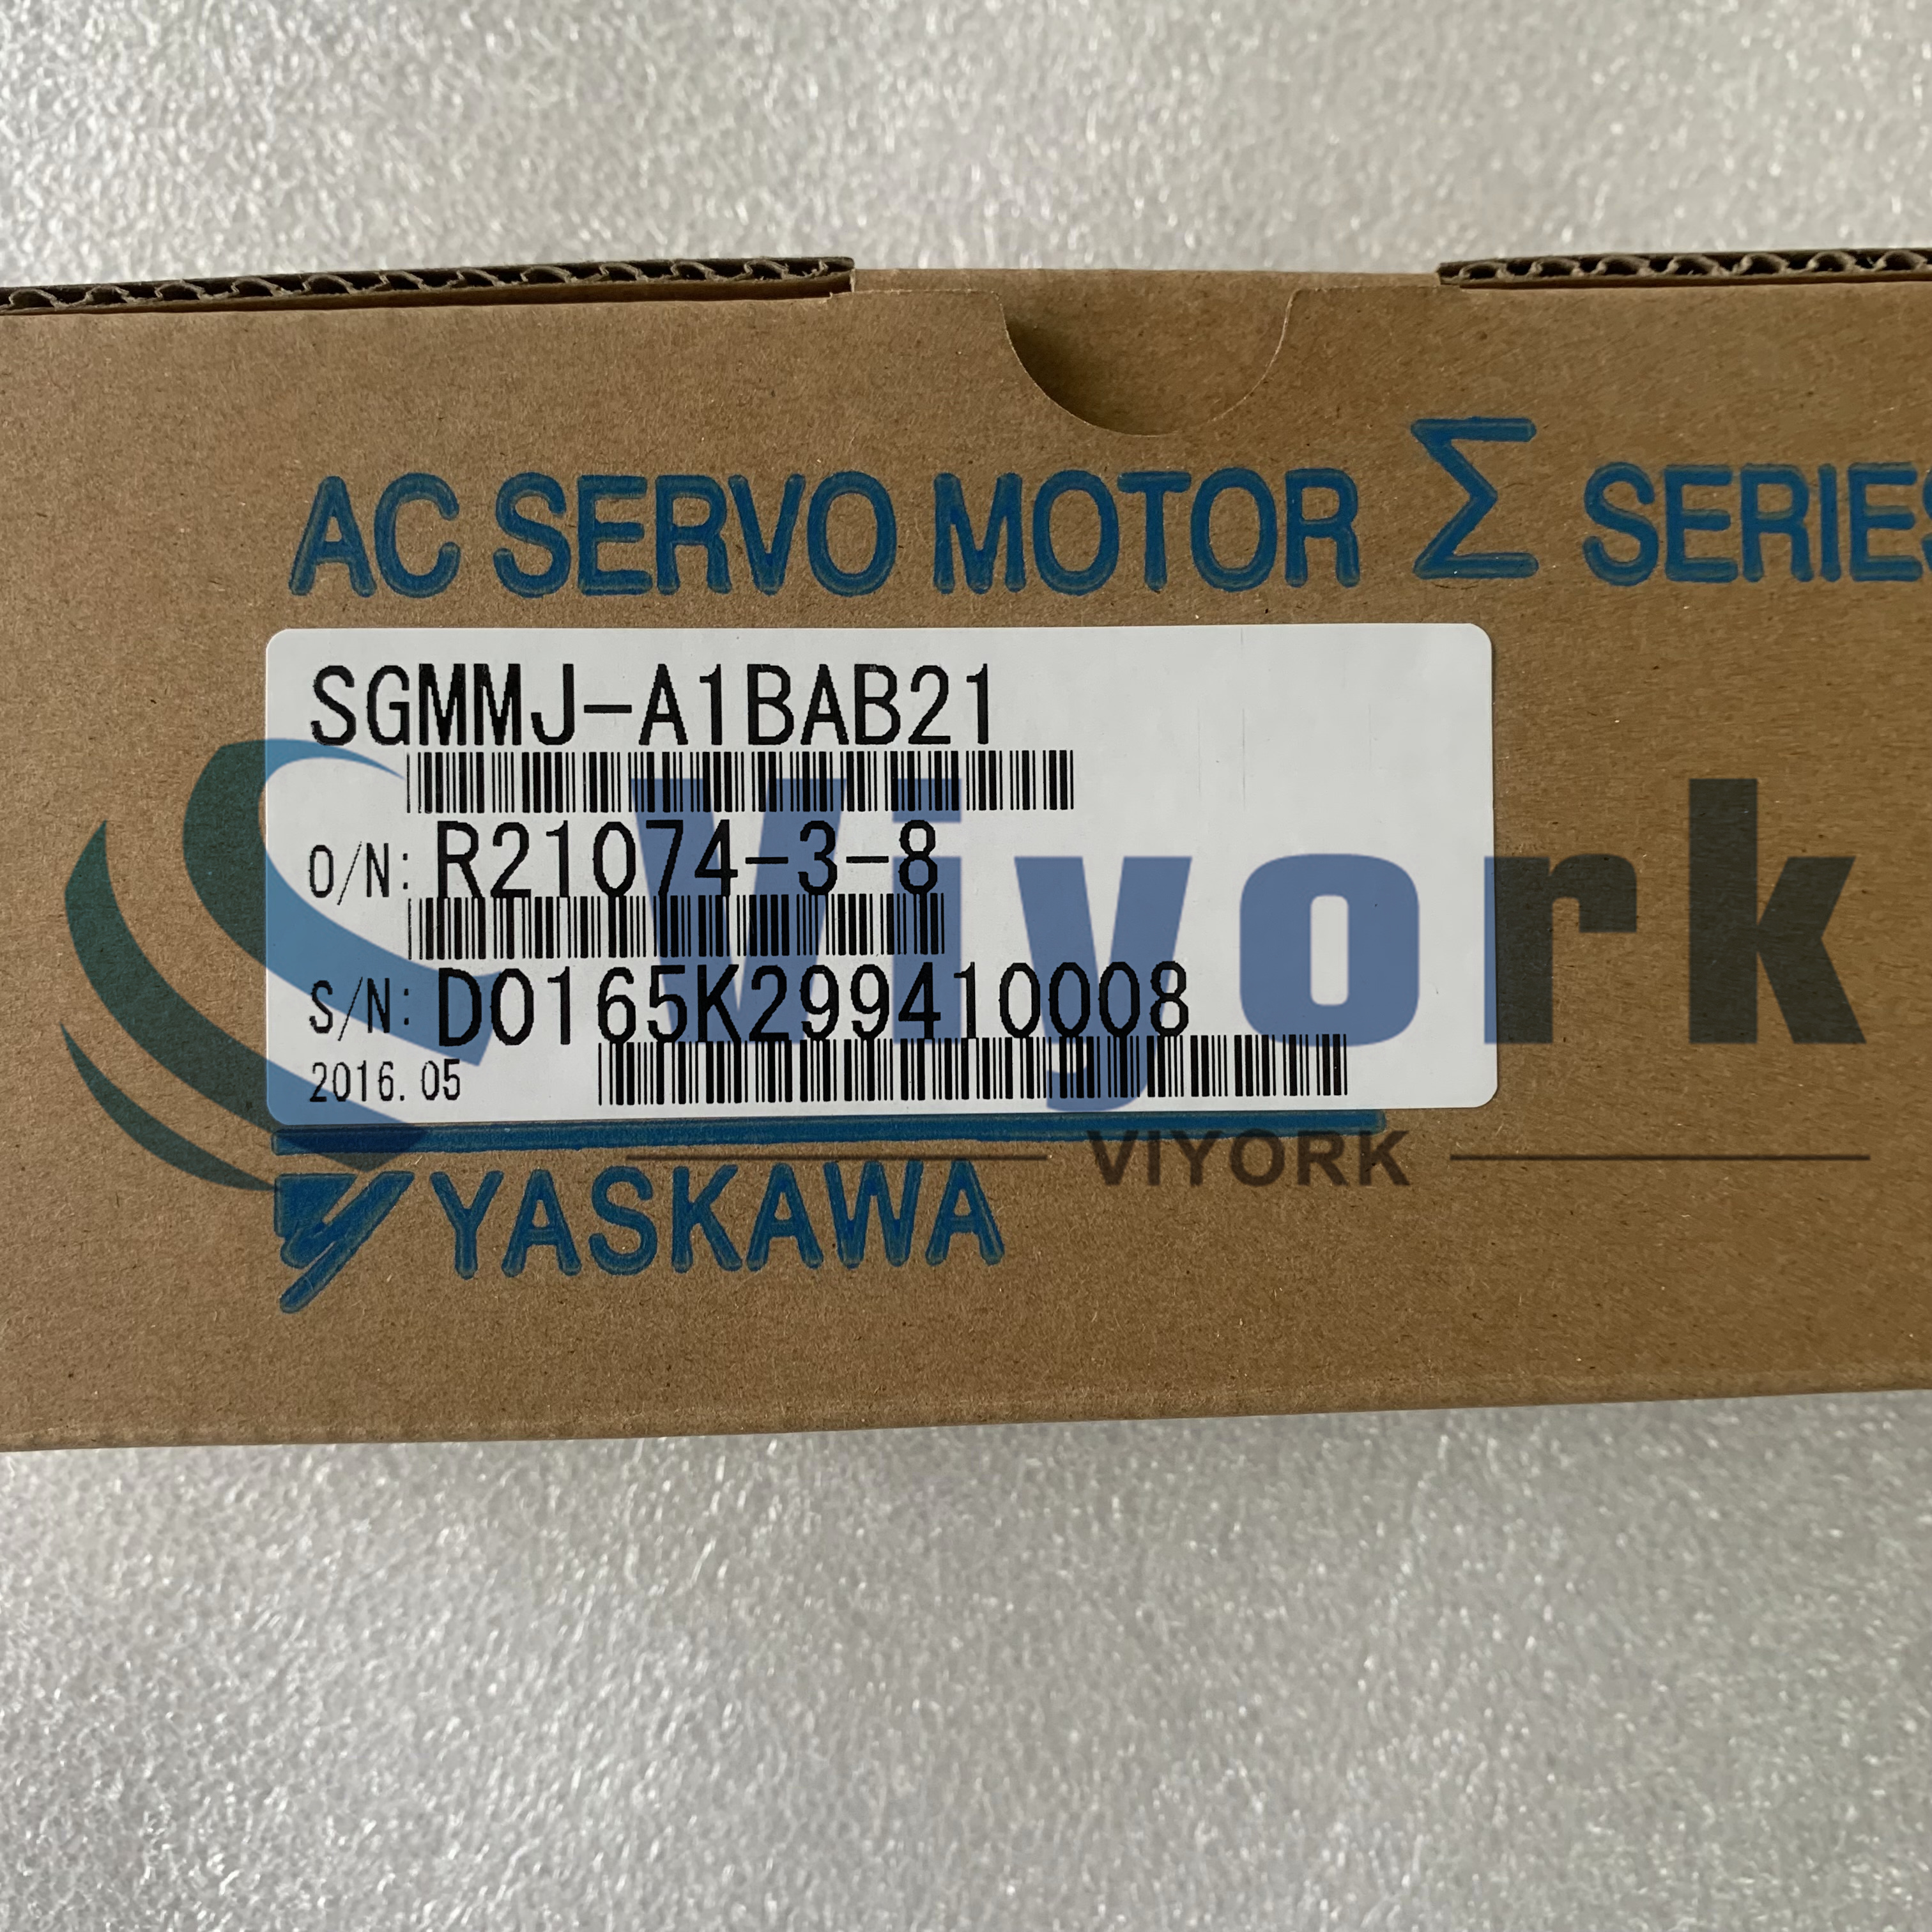 Yaskawa SGMMJ-A1BAB21 AC SERVO MOTOR